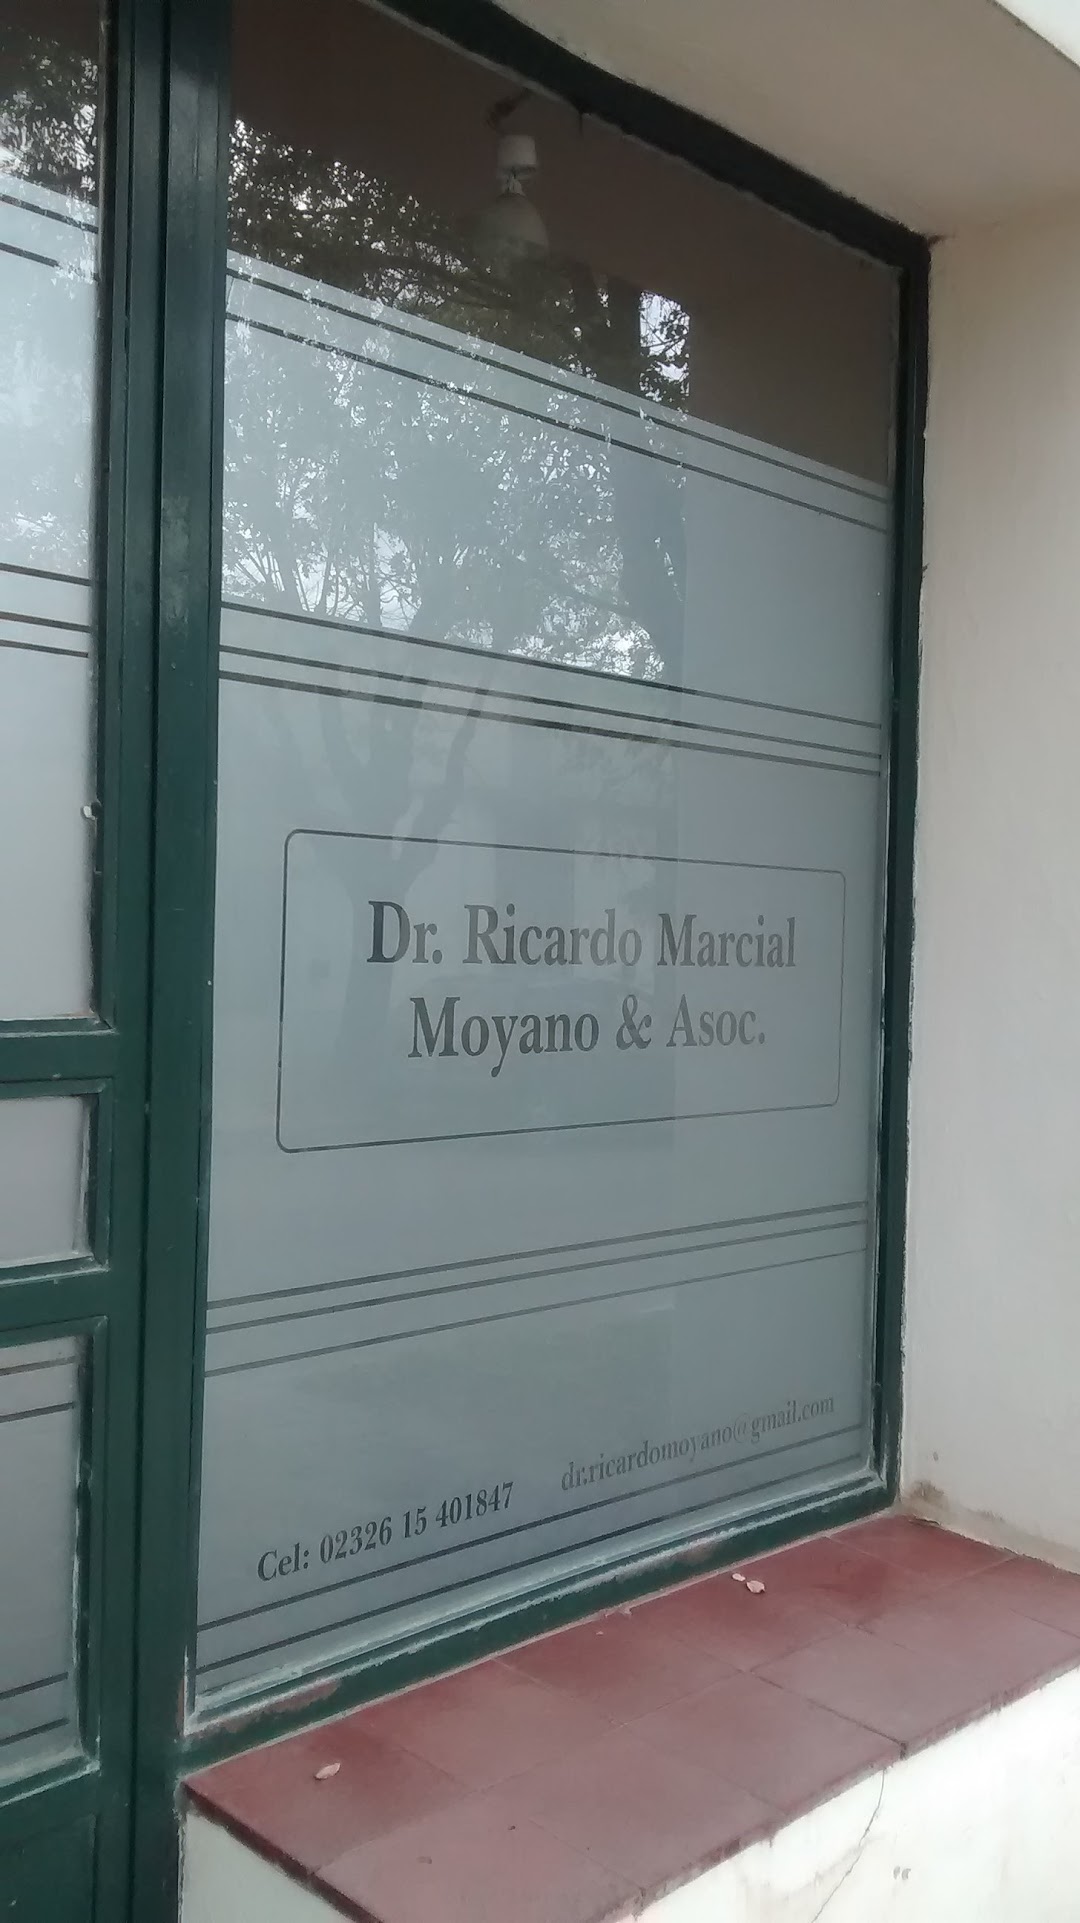 Dr Ricardo Marcial Moyano & Asoc.